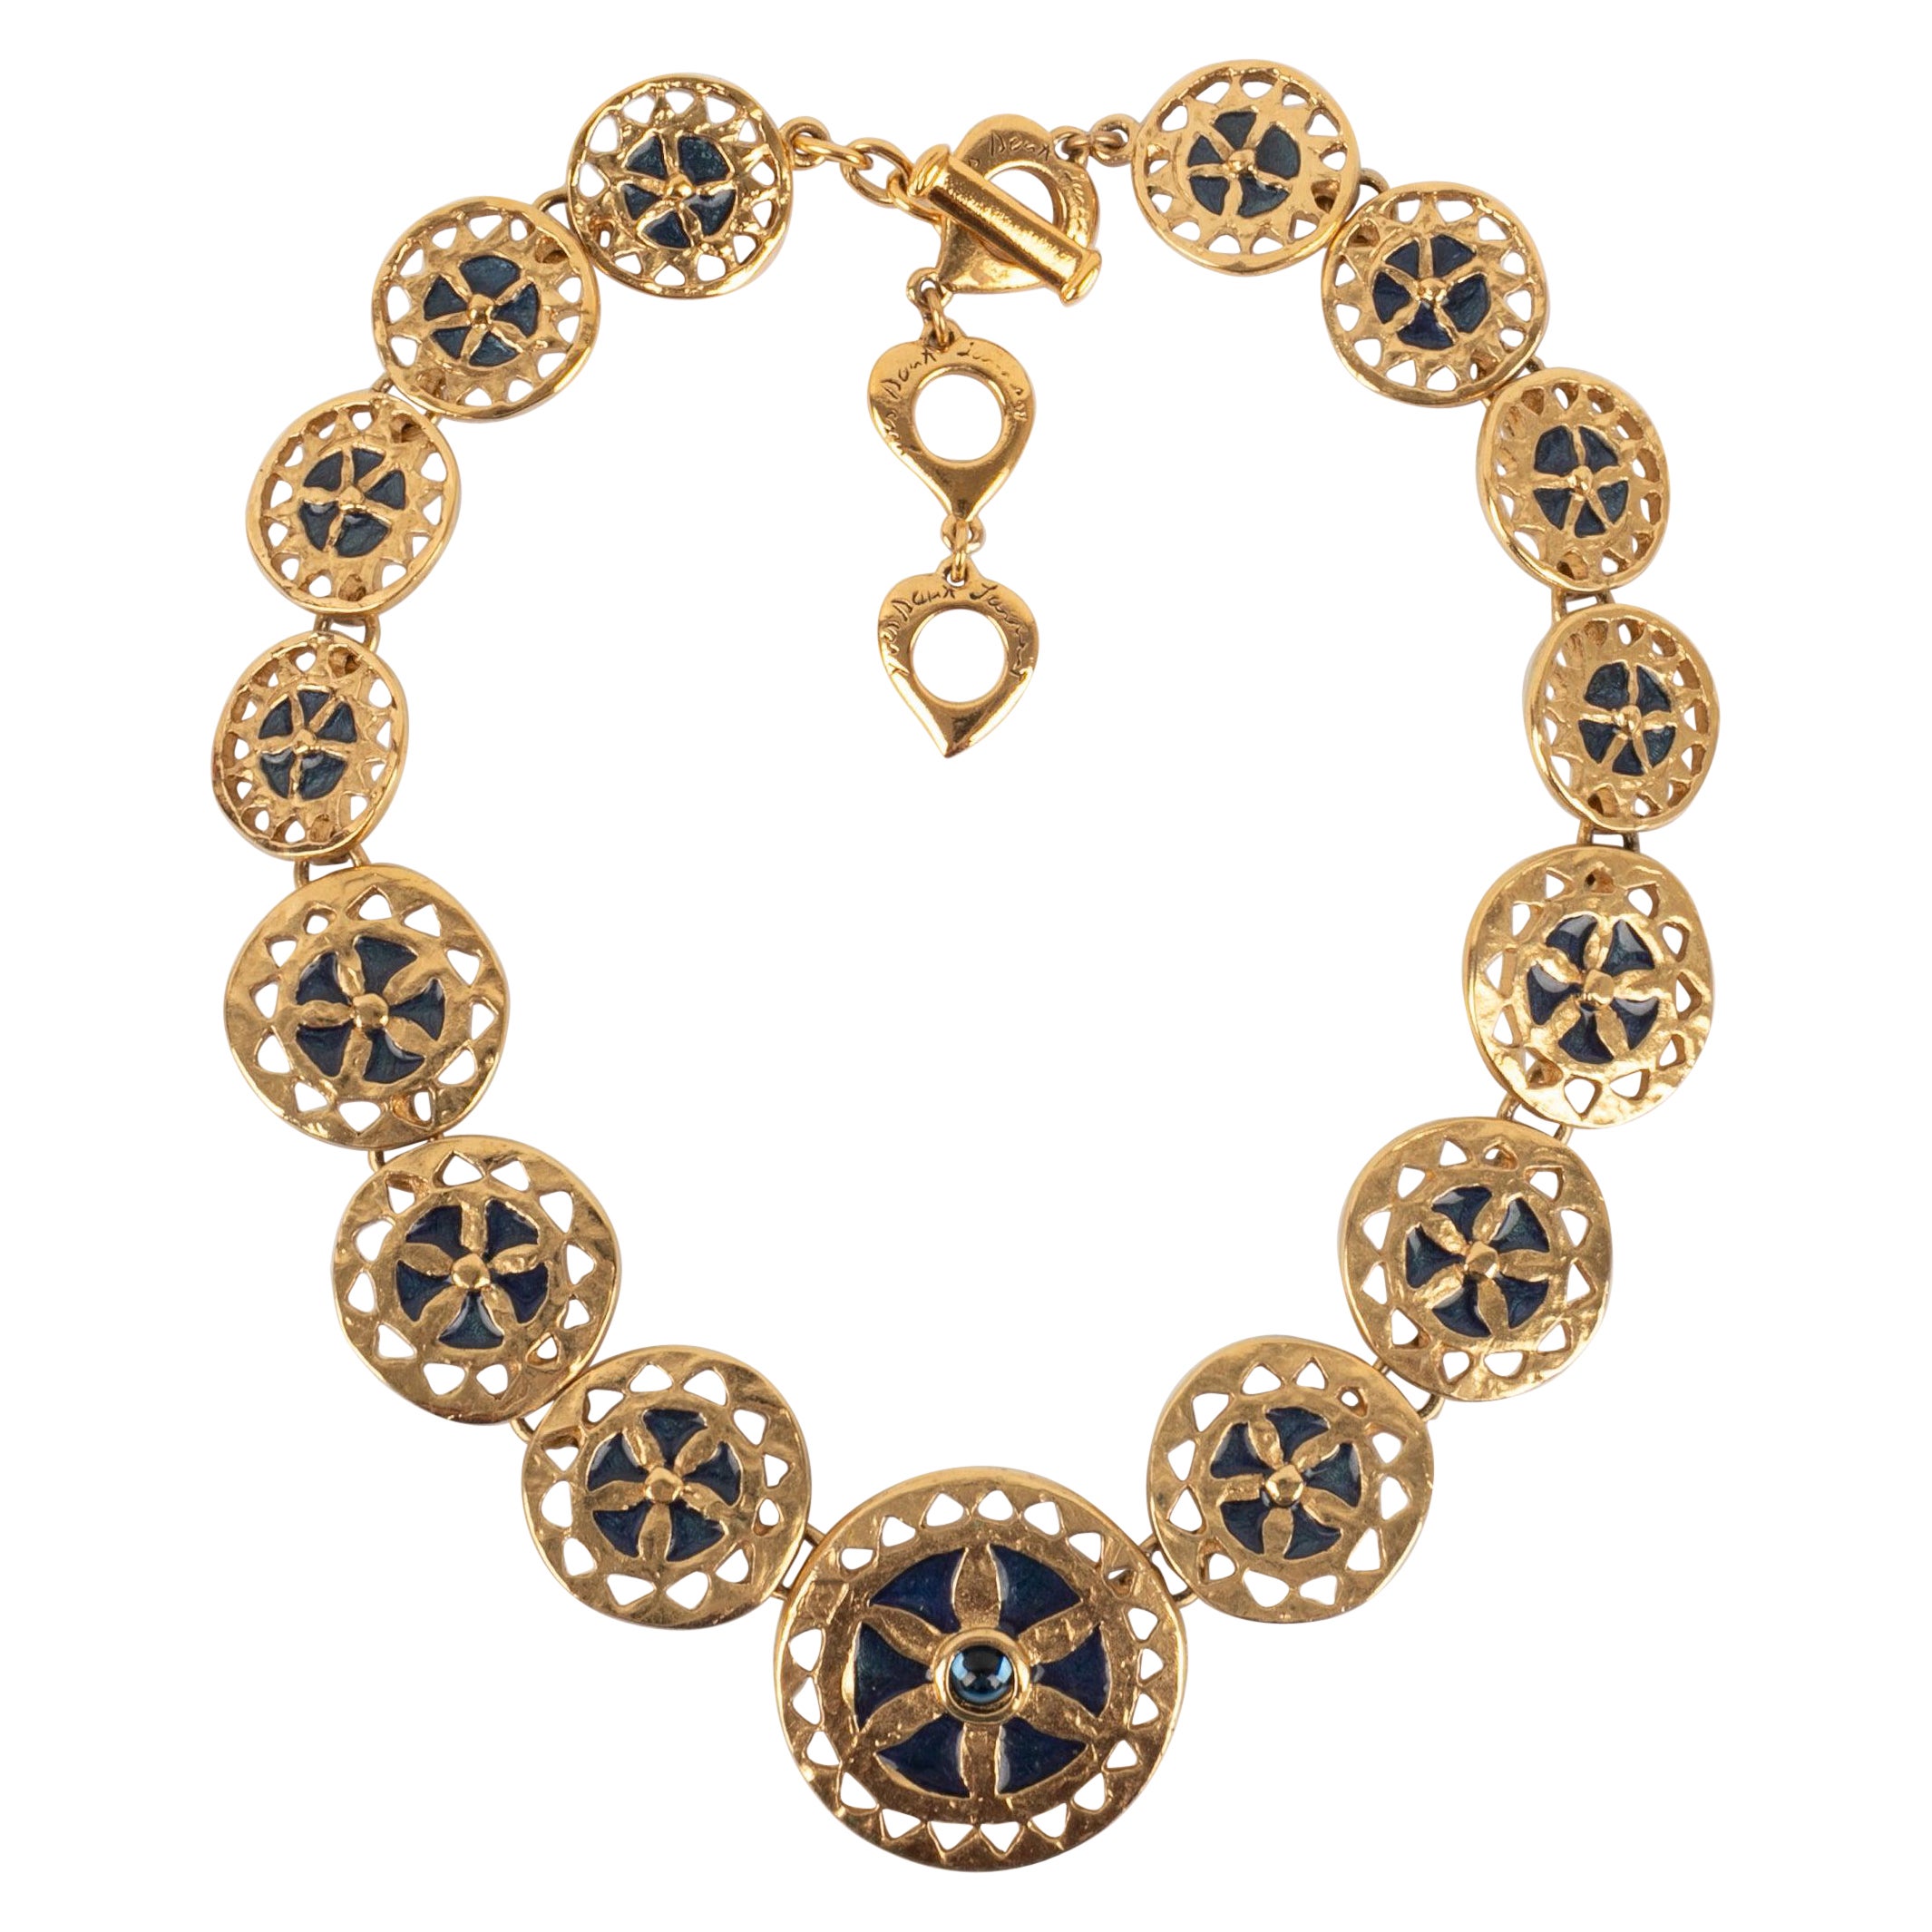 Yves Saint Laurent Golden Openwork Metal Necklace Enameled with Blue